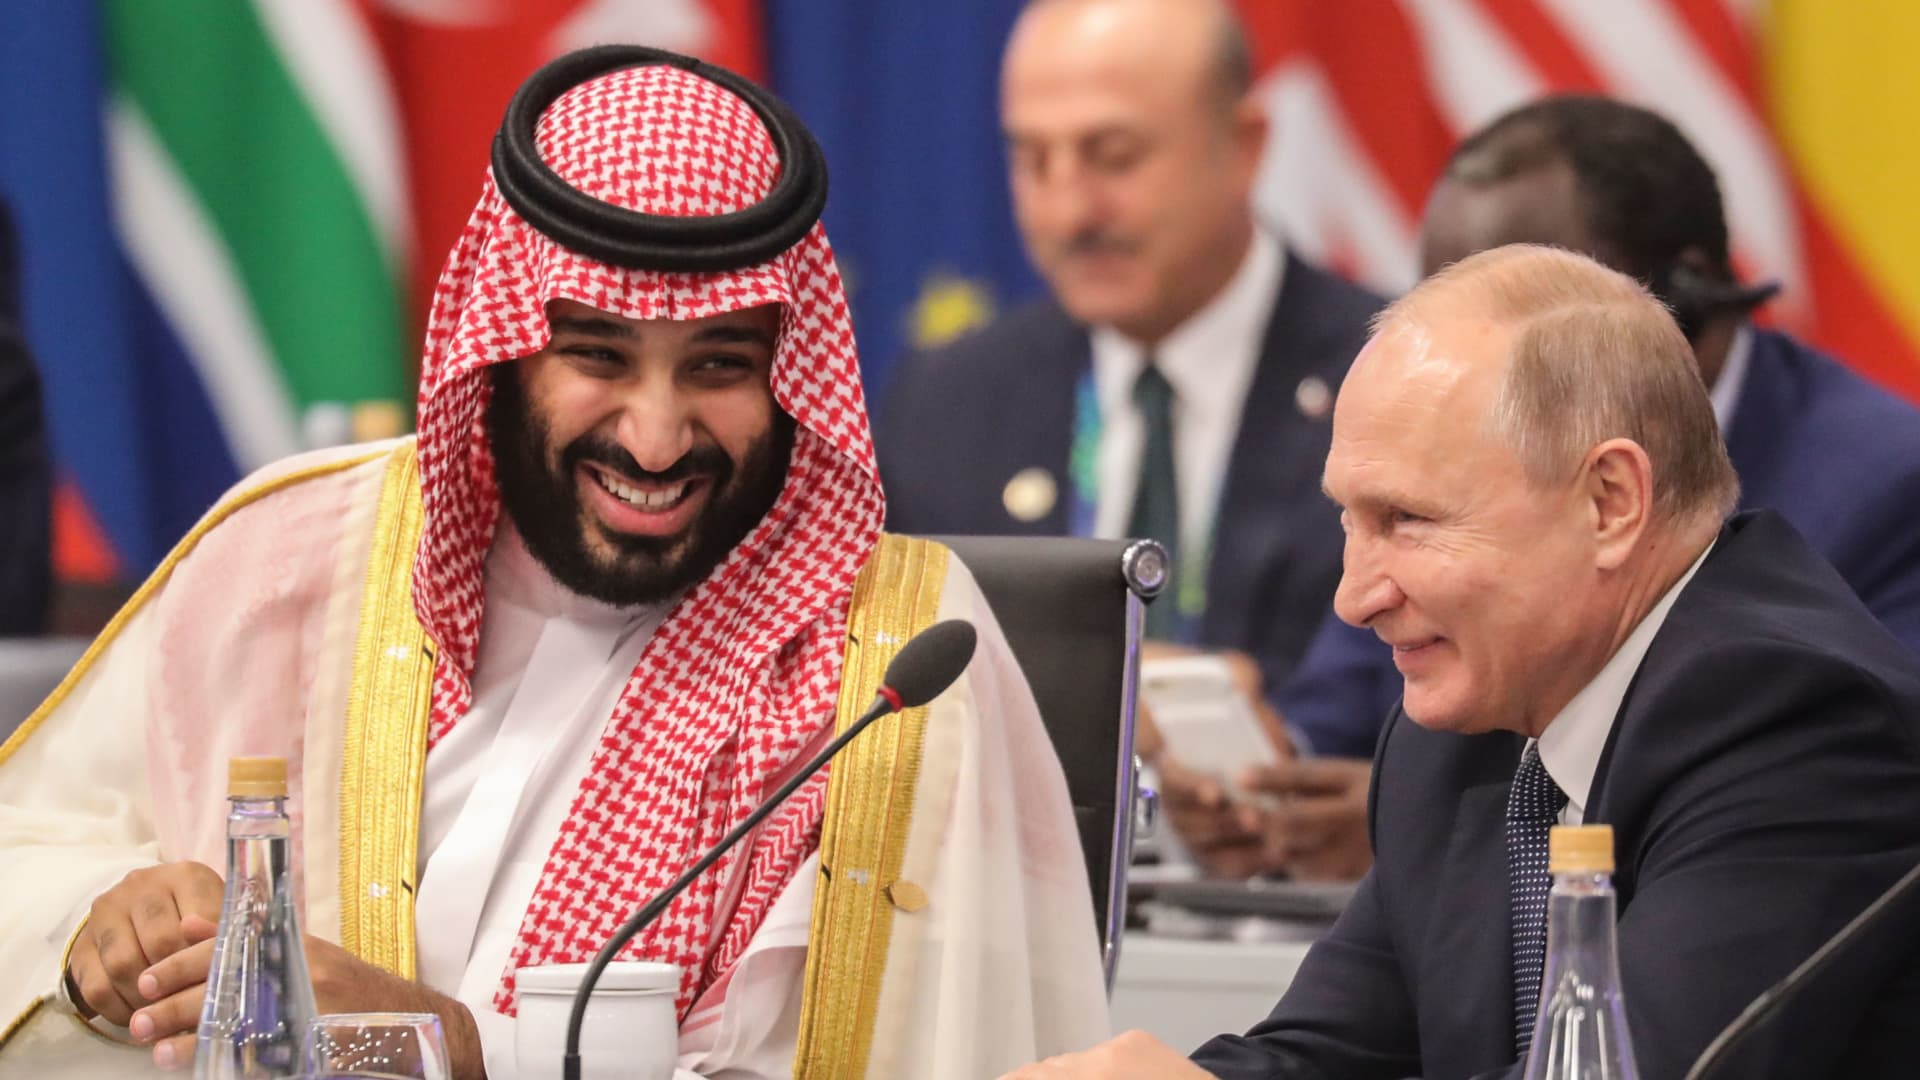 Russian President Vladimir Putin and Saudi Arabia's Crown Prince Mohammed bin Salman at the G20 Leaders' Summit in Buenos Aires, on Nov. 30, 2018.